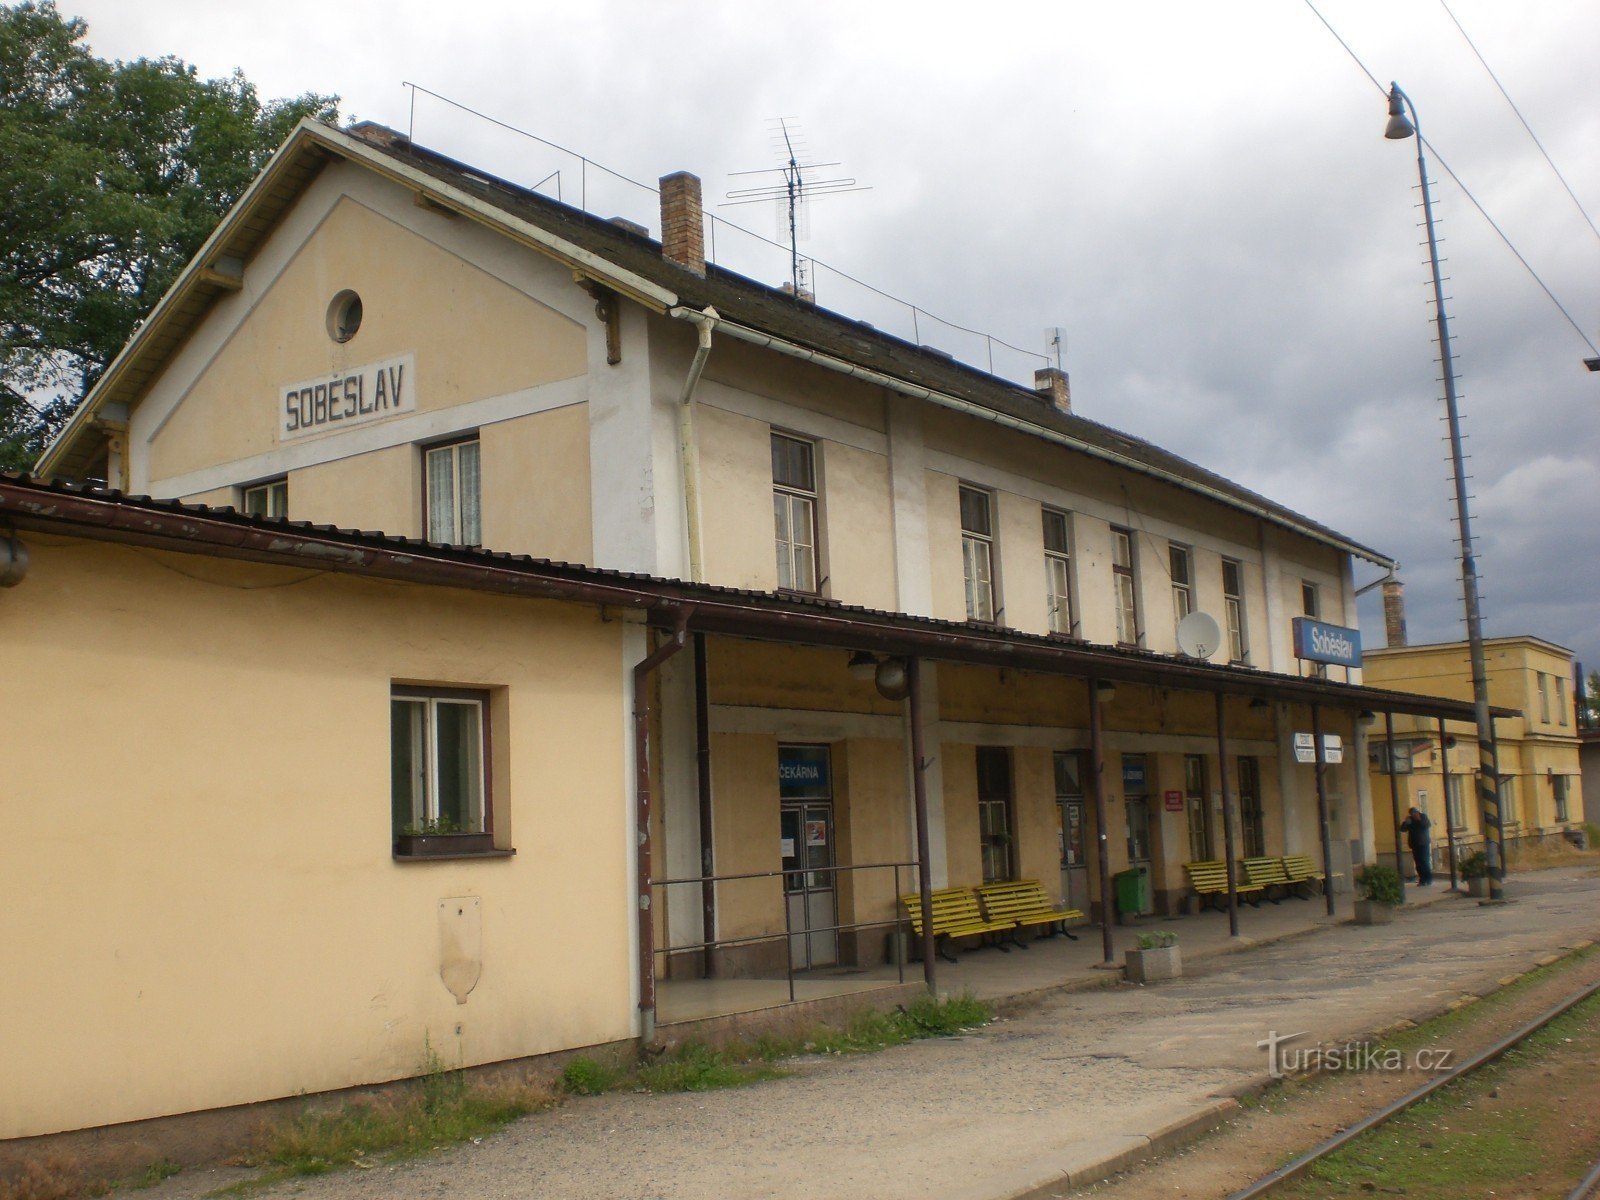 Soběslav - estação ferroviária